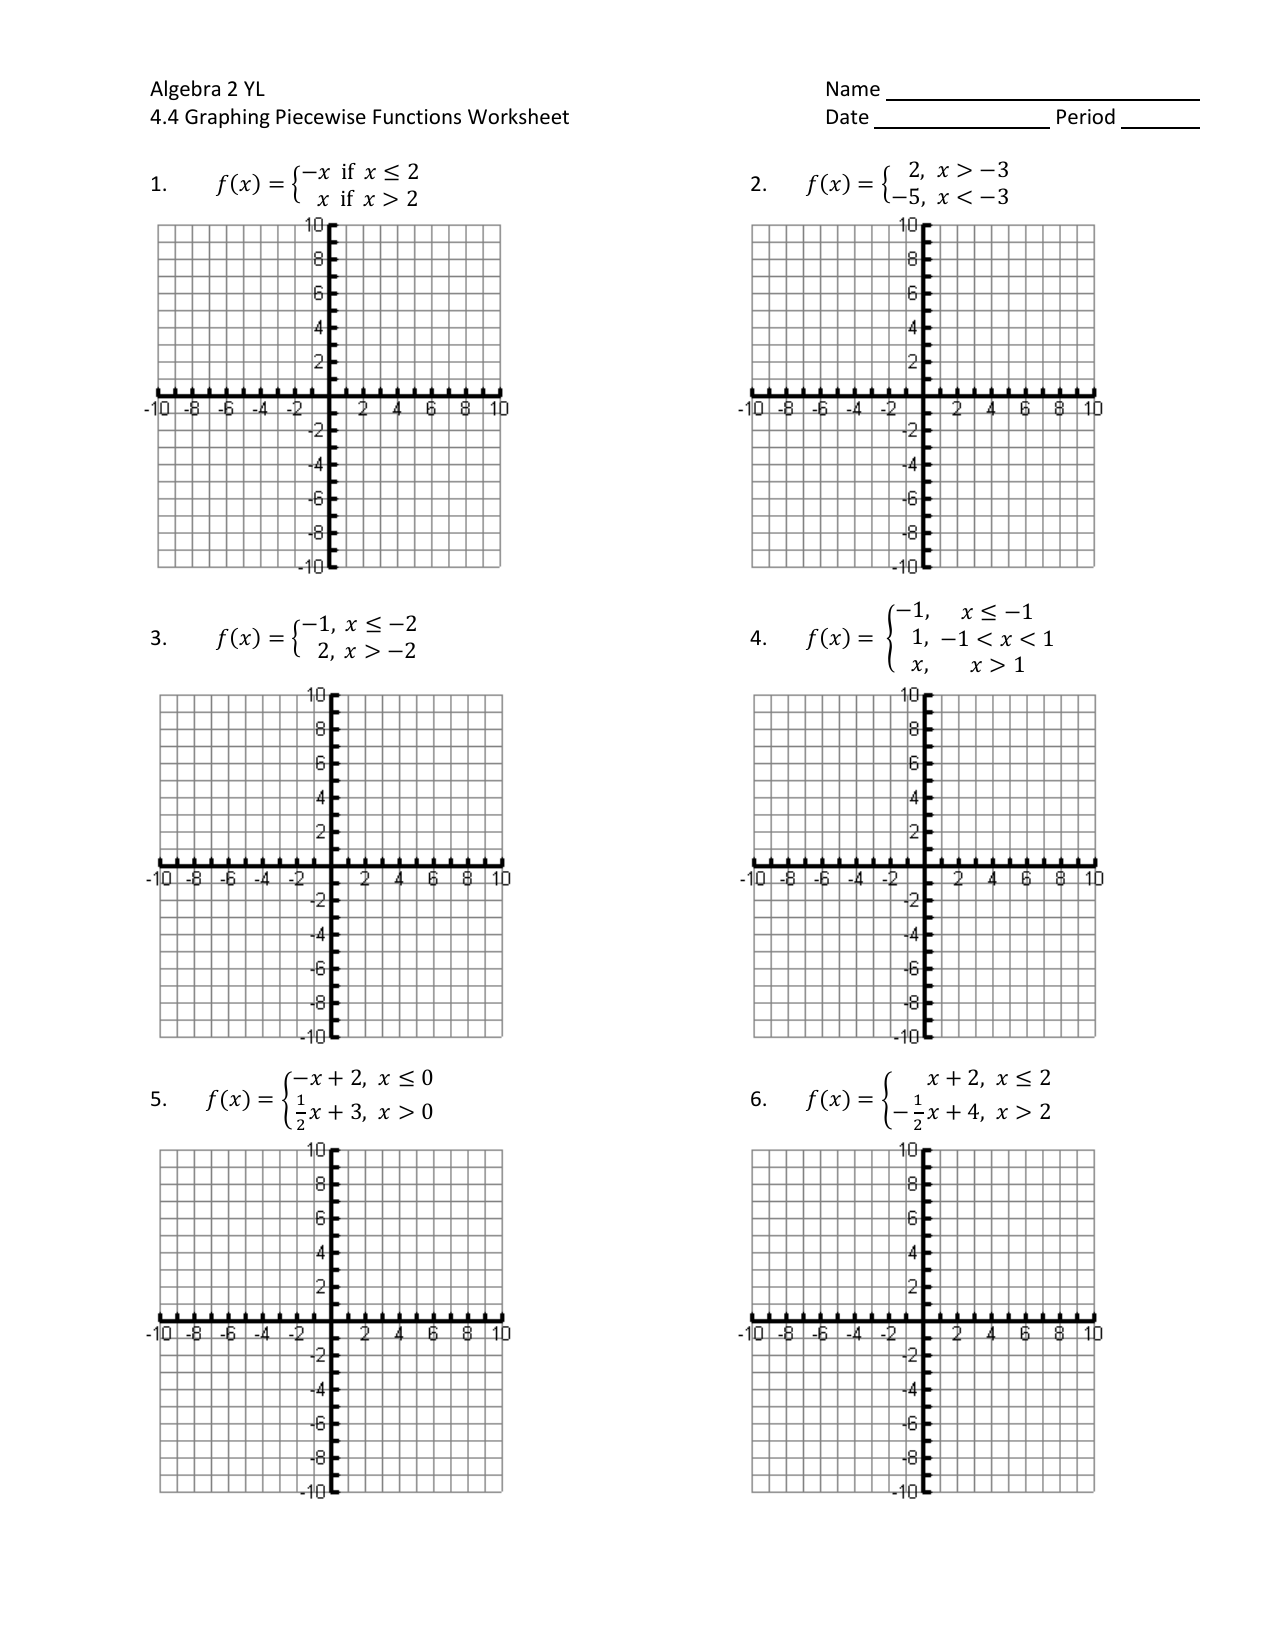 Algebra 2224 YL Name 224.224 Graphing Piecewise Functions Worksheet Intended For Worksheet Piecewise Functions Algebra 2